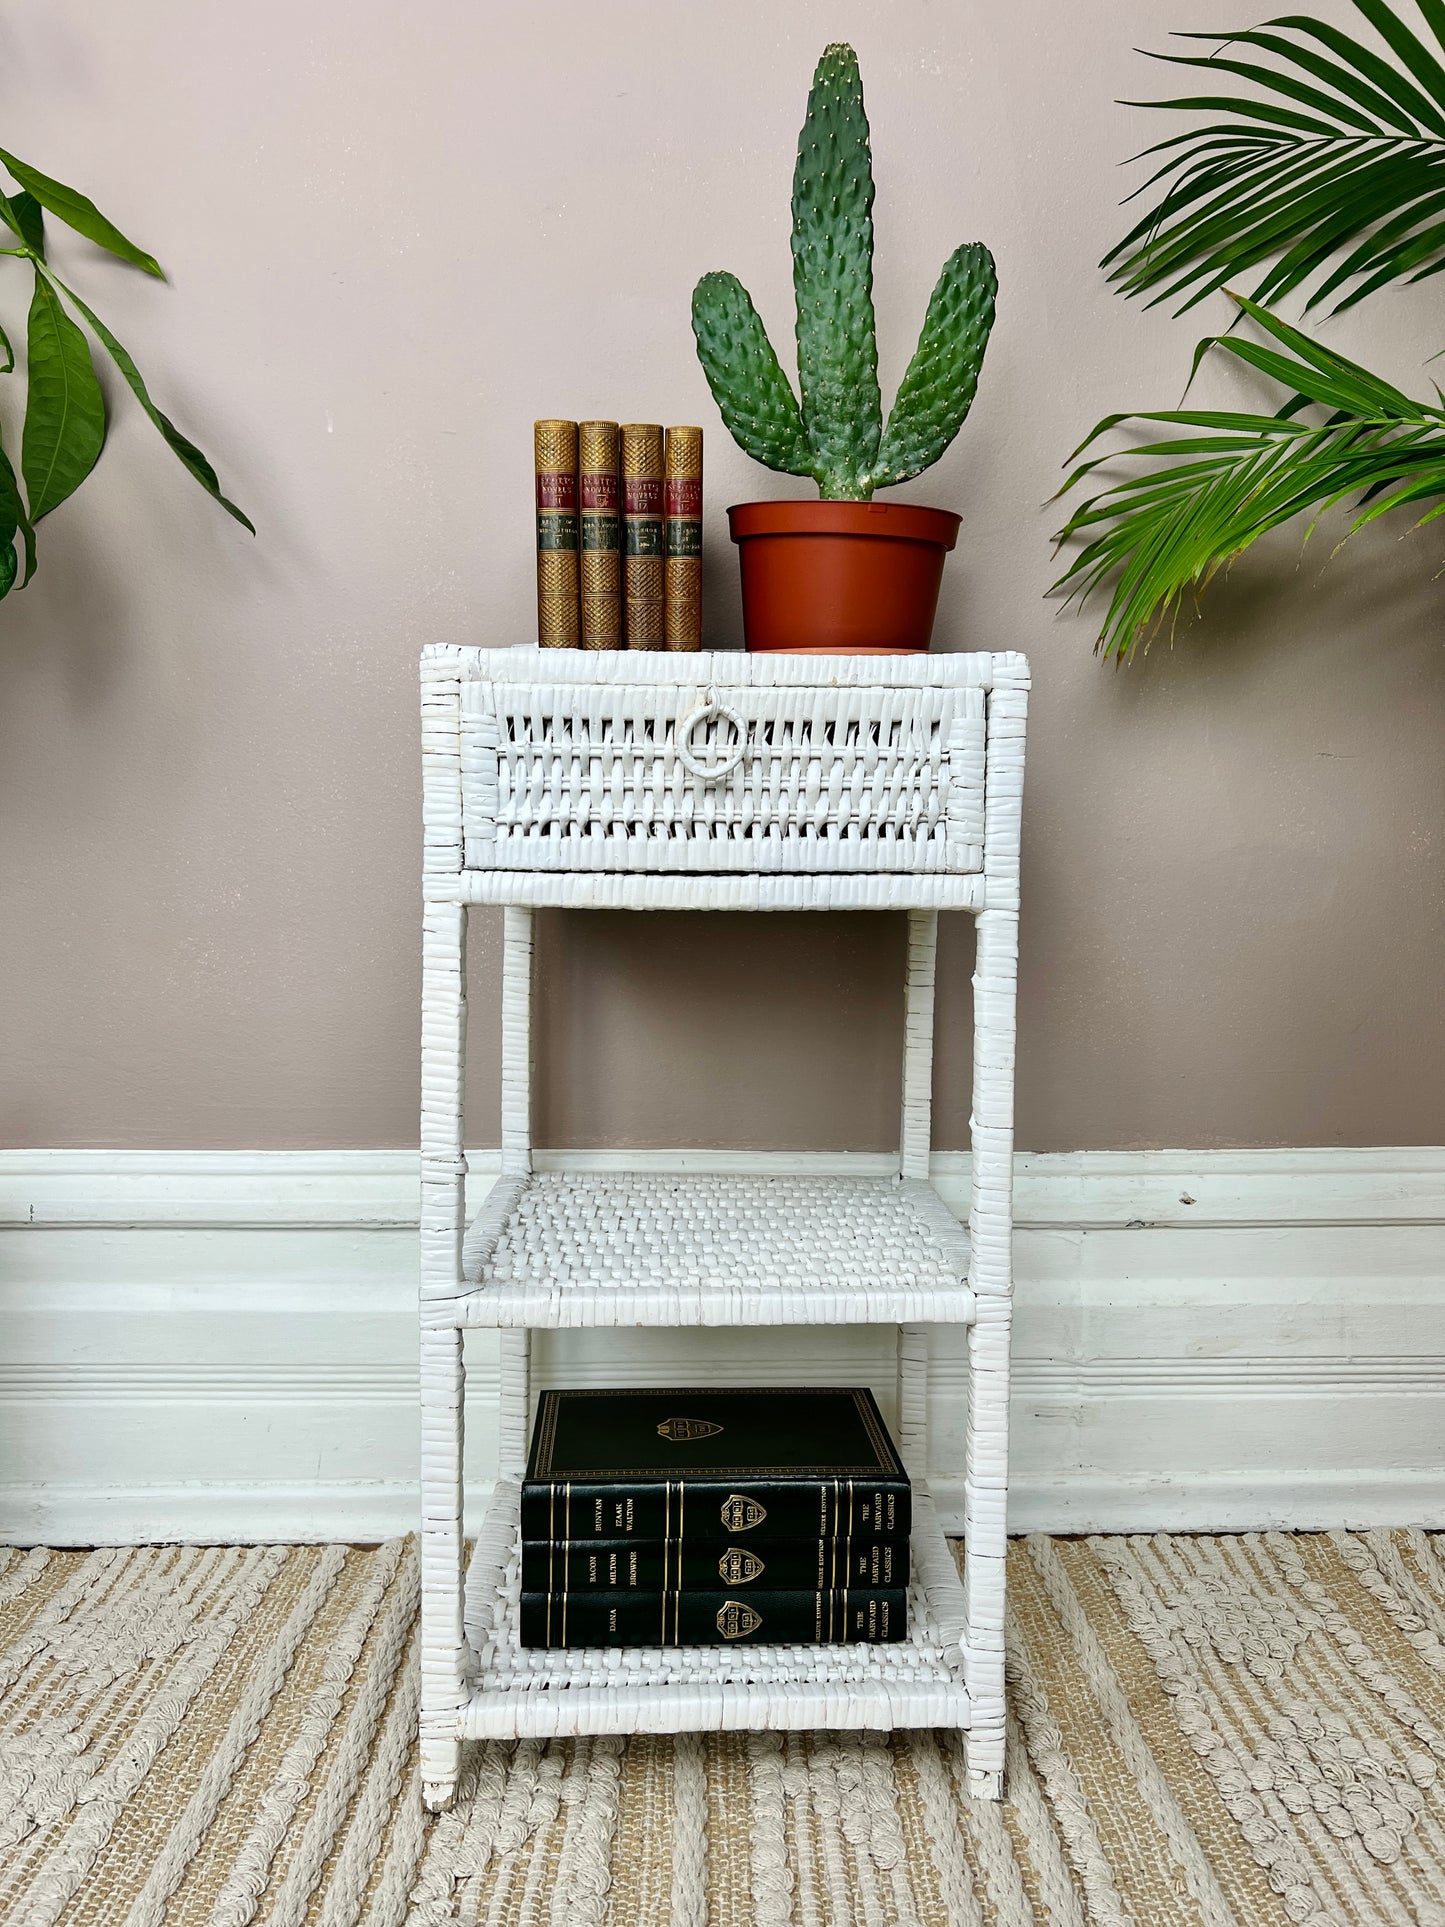 The Mini Wicker Shelf/Stand